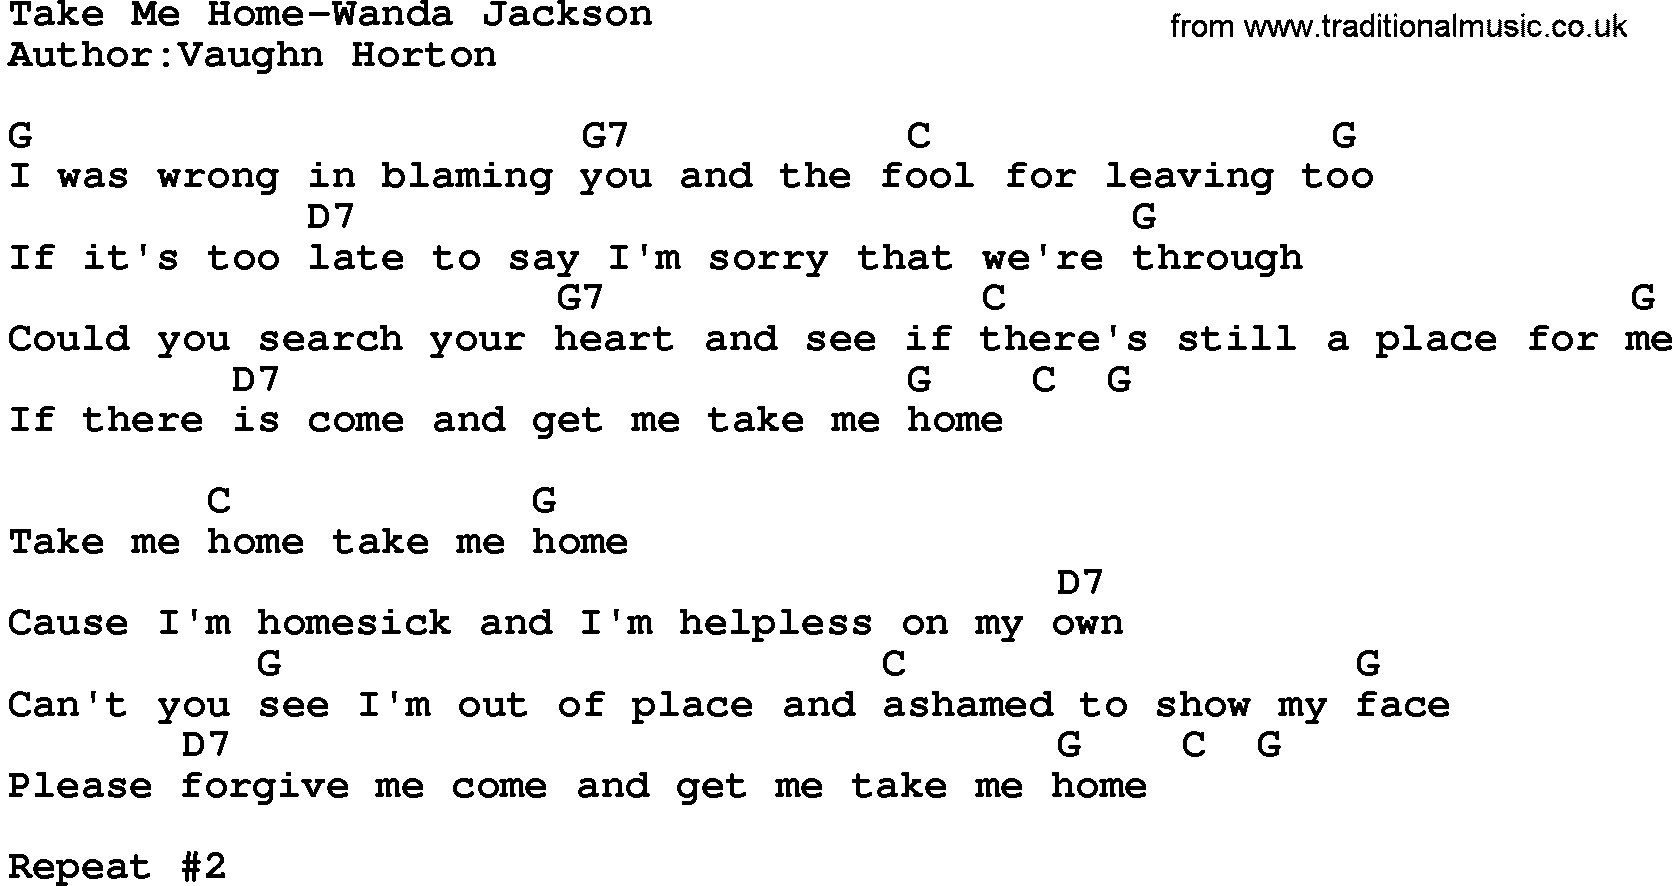 Country music song: Take Me Home-Wanda Jackson lyrics and chords